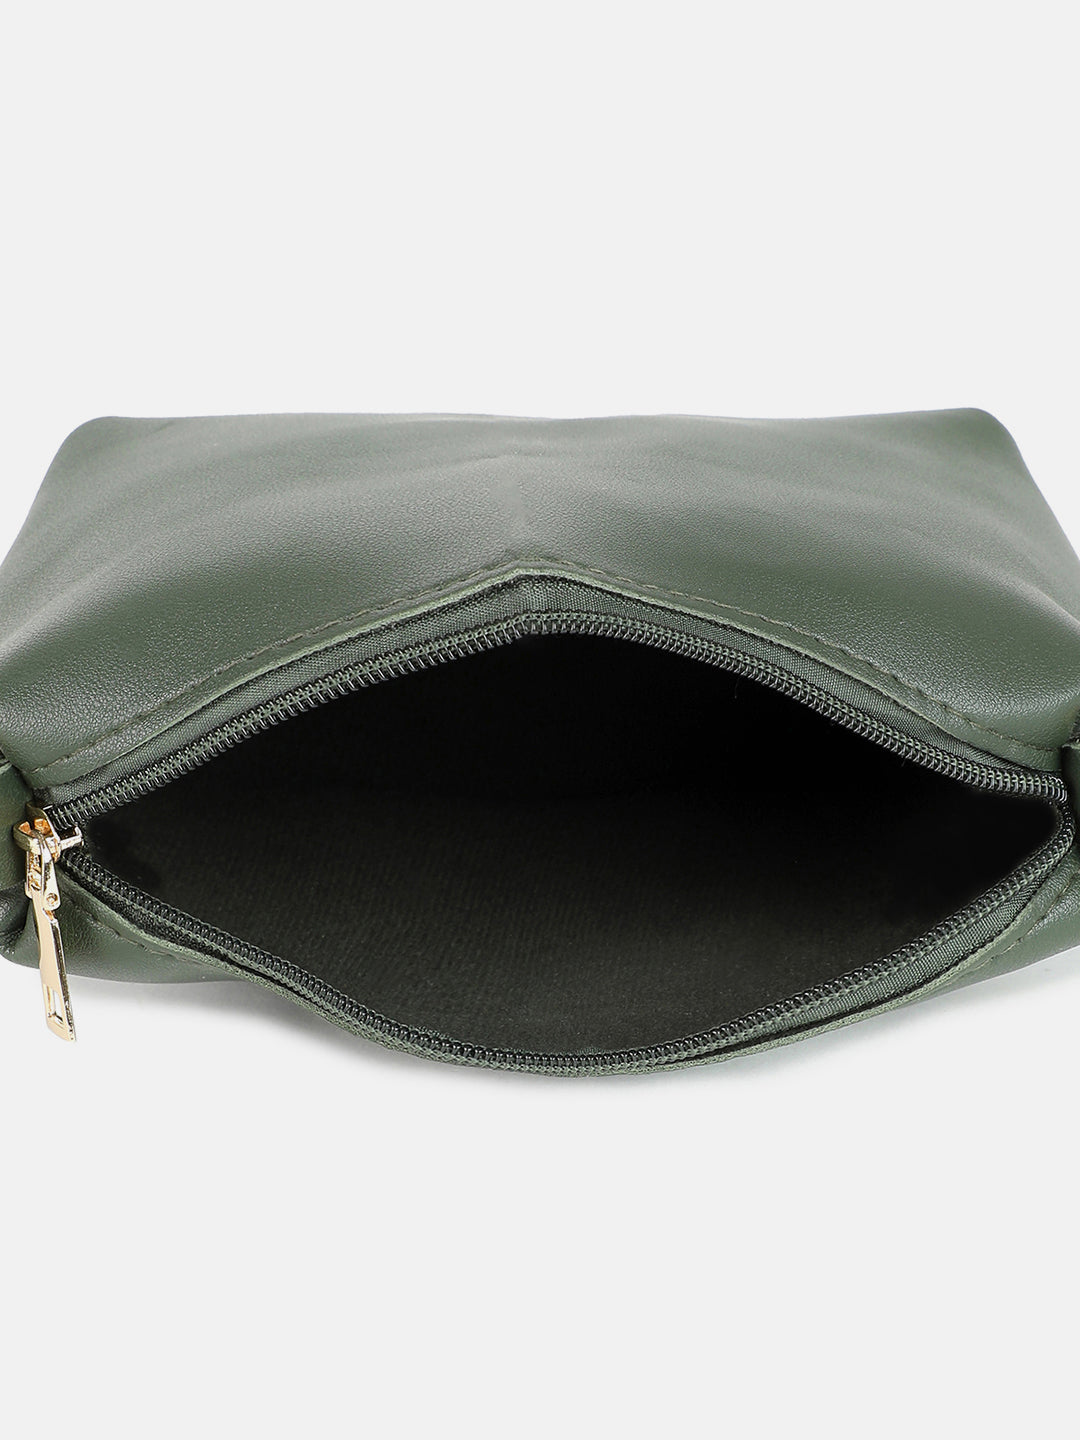 Daphne Green Handbag Set